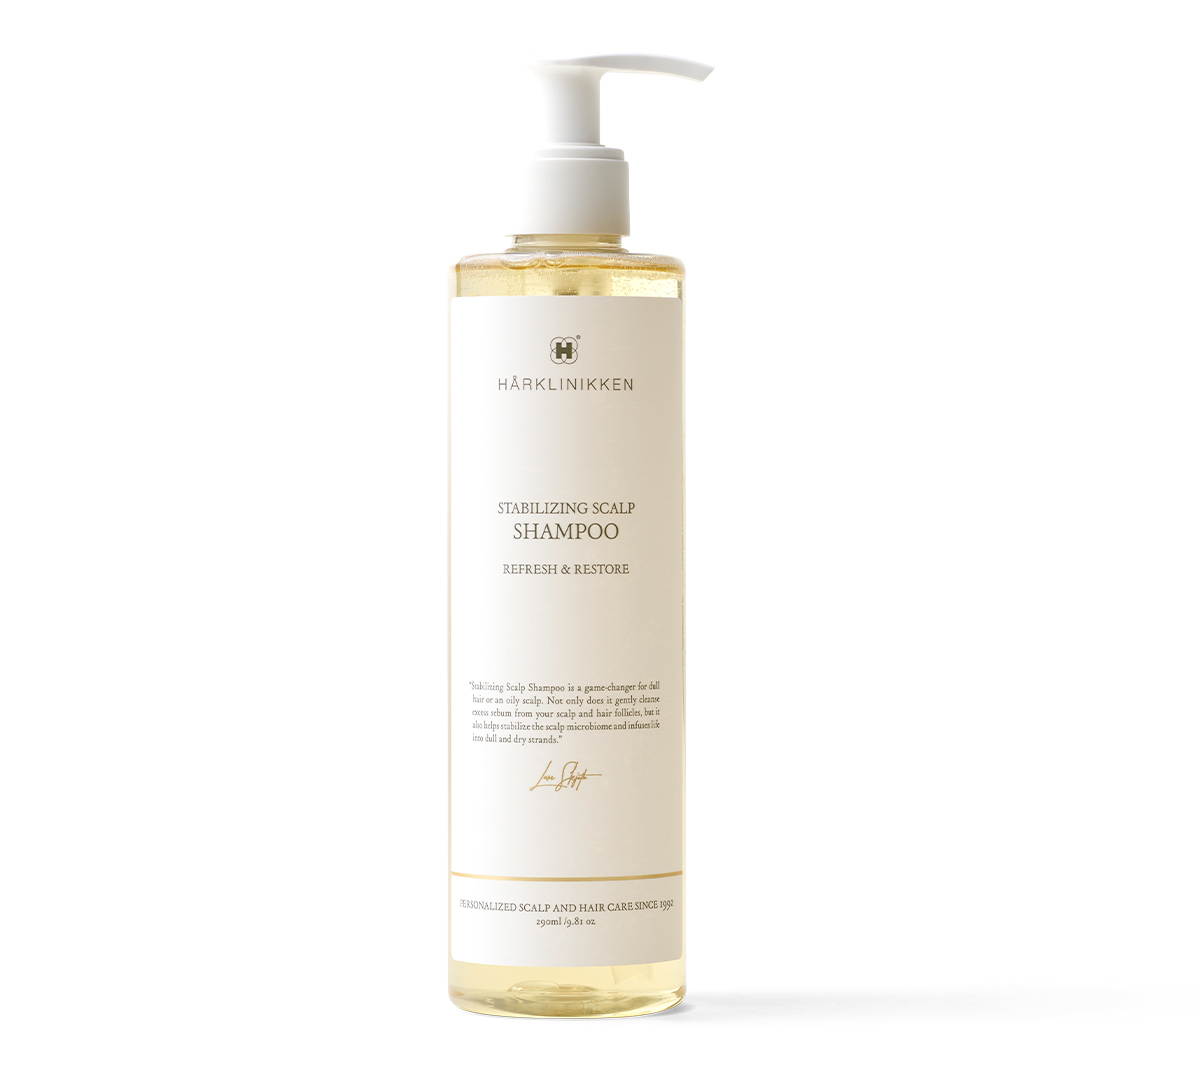 temperament Spiller skak Sovesal The Best Shampoo for Oily Hair: Stabilizing Scalp Shampoo